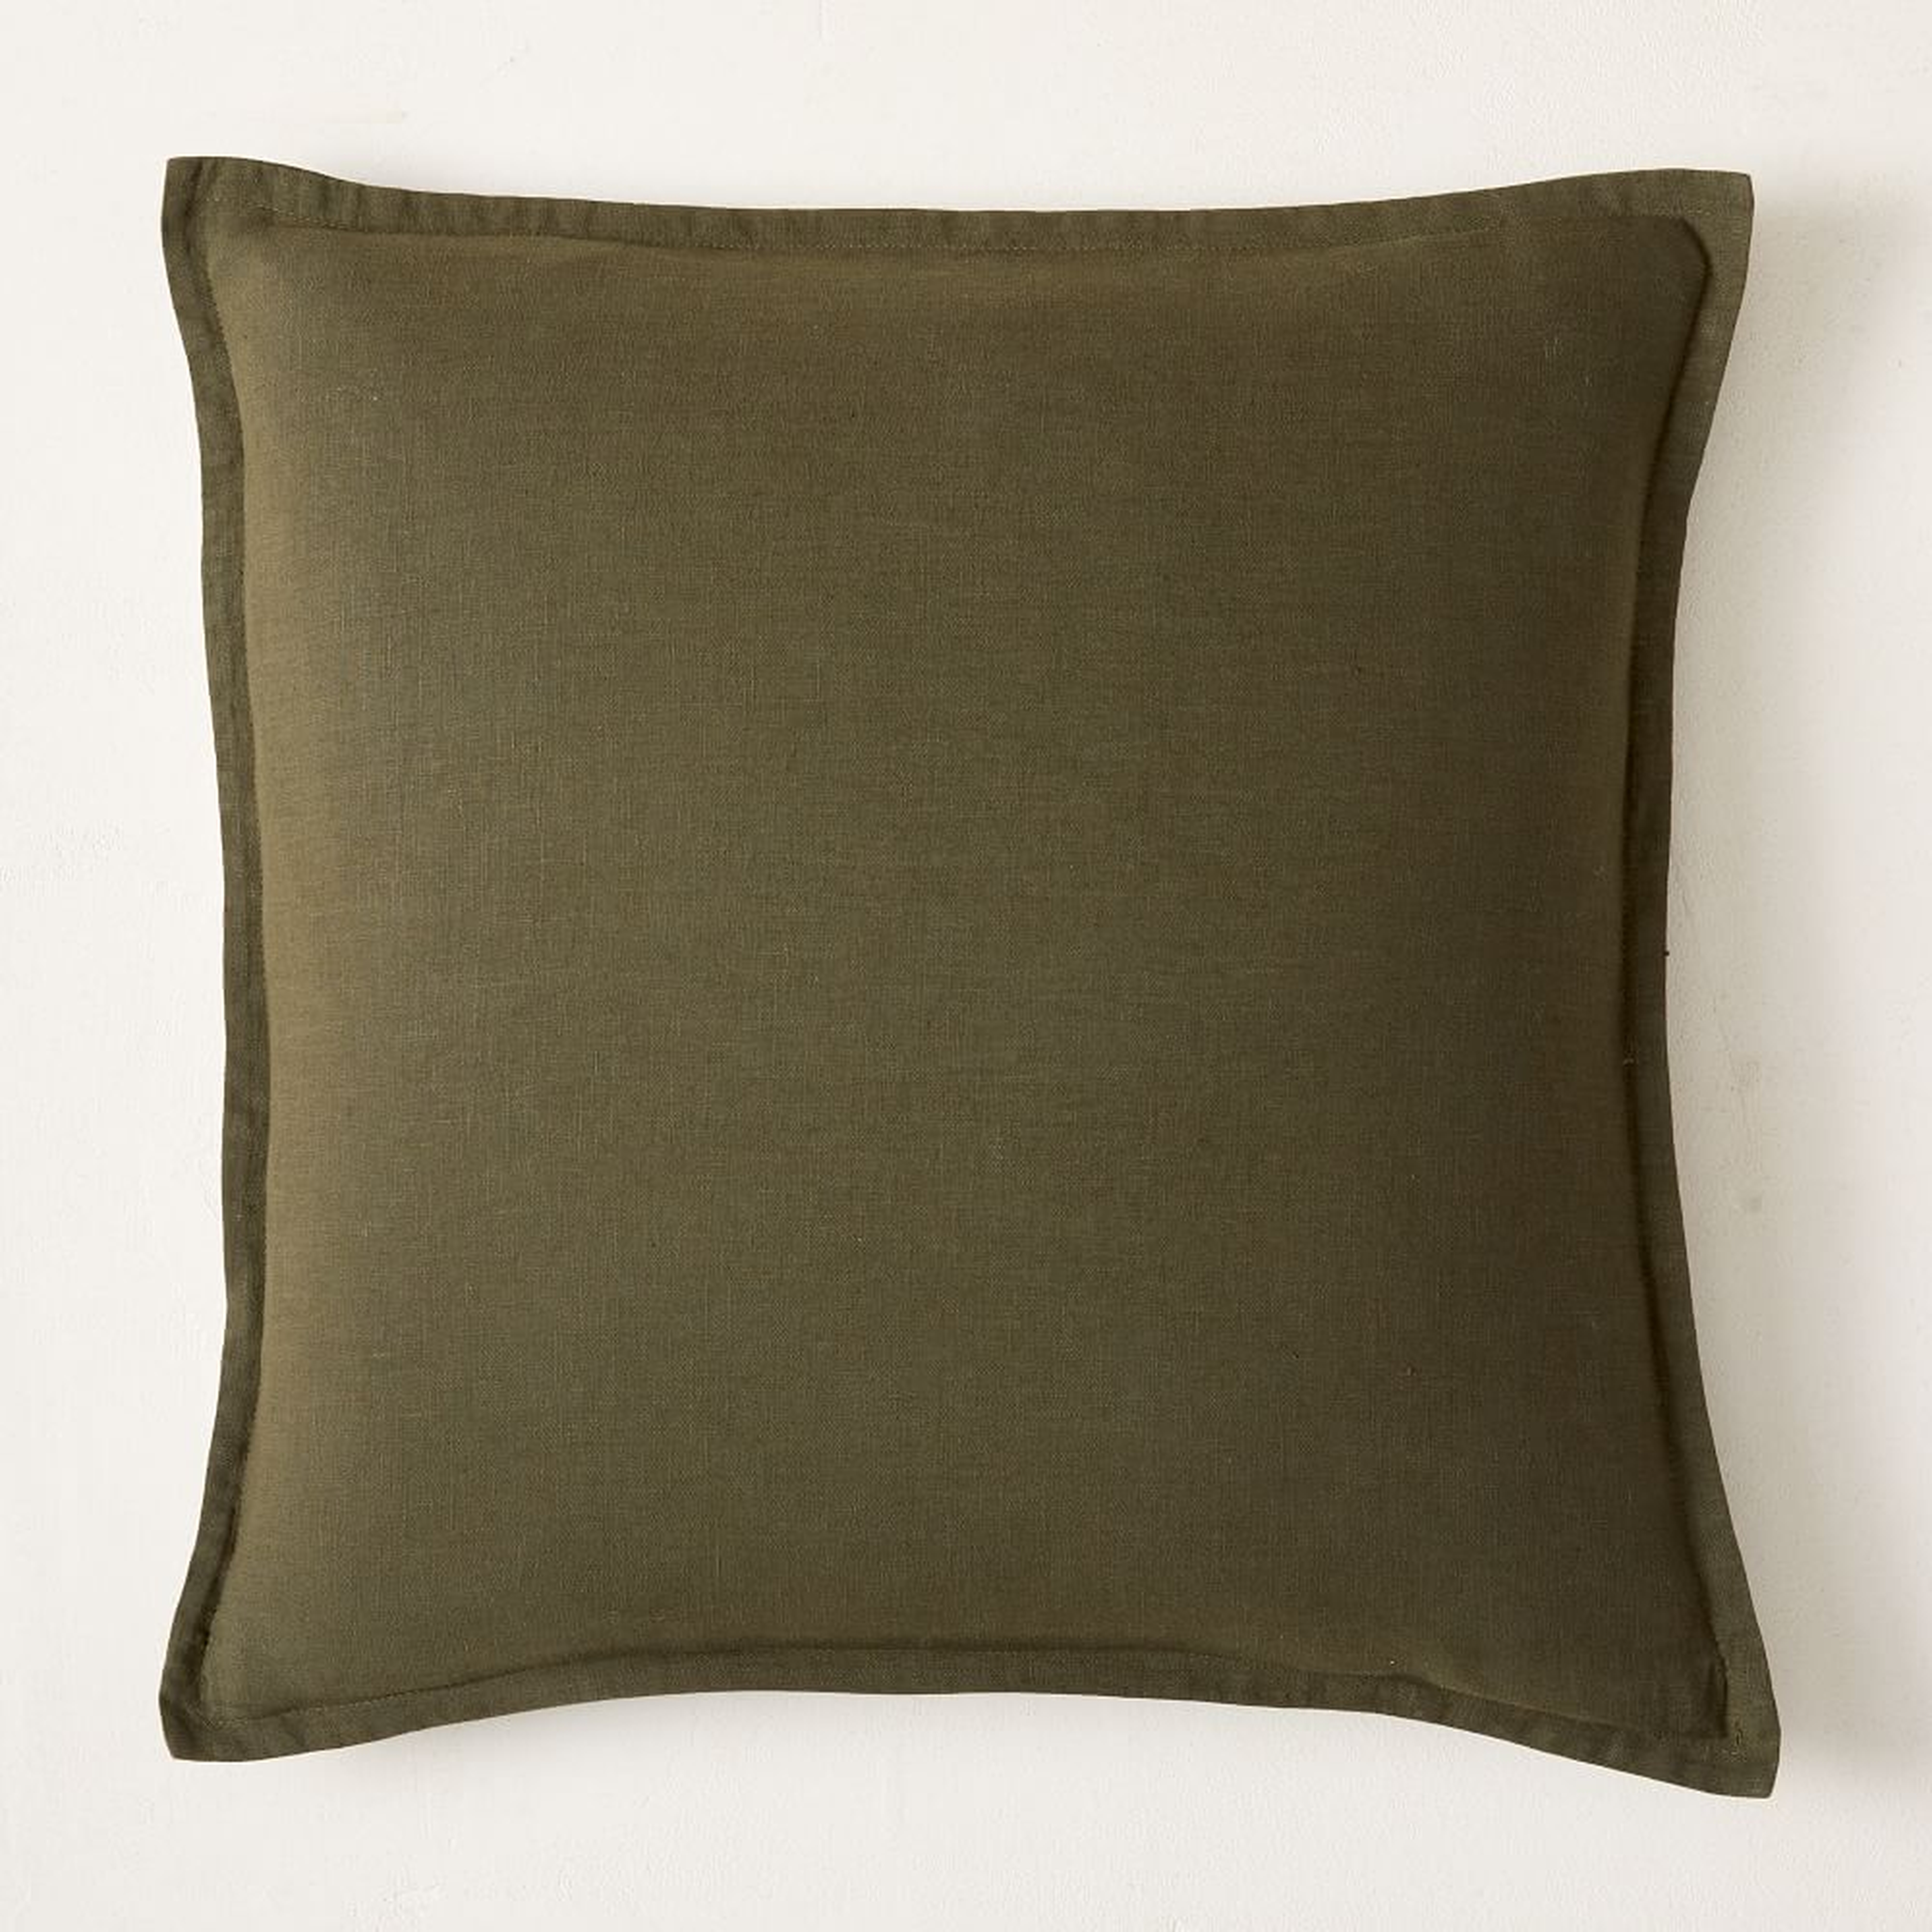 European Flax Linen Pillow Cover, 20"x20", Dark Olive - West Elm